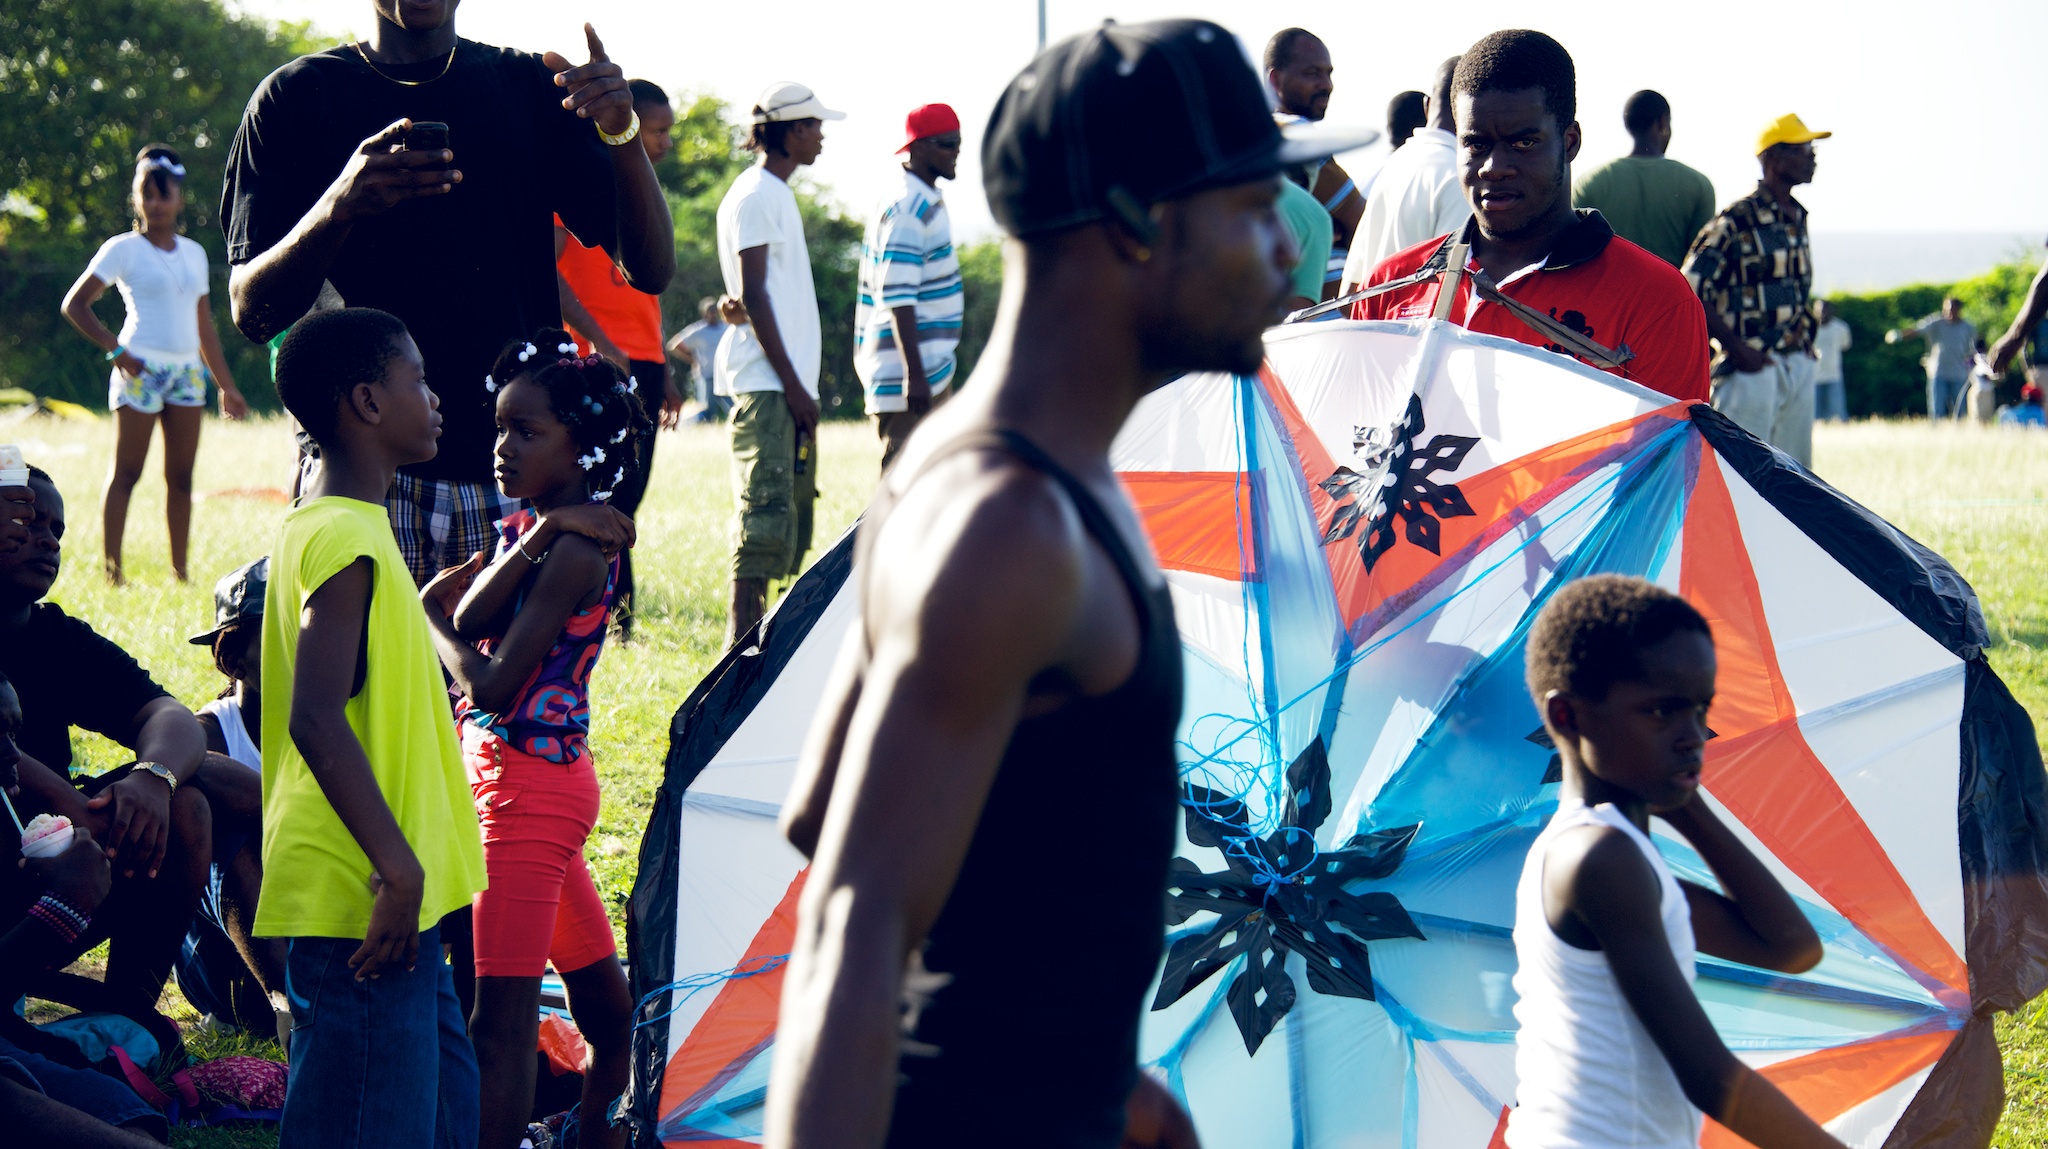 Tobago Flying Colours Kite Festival